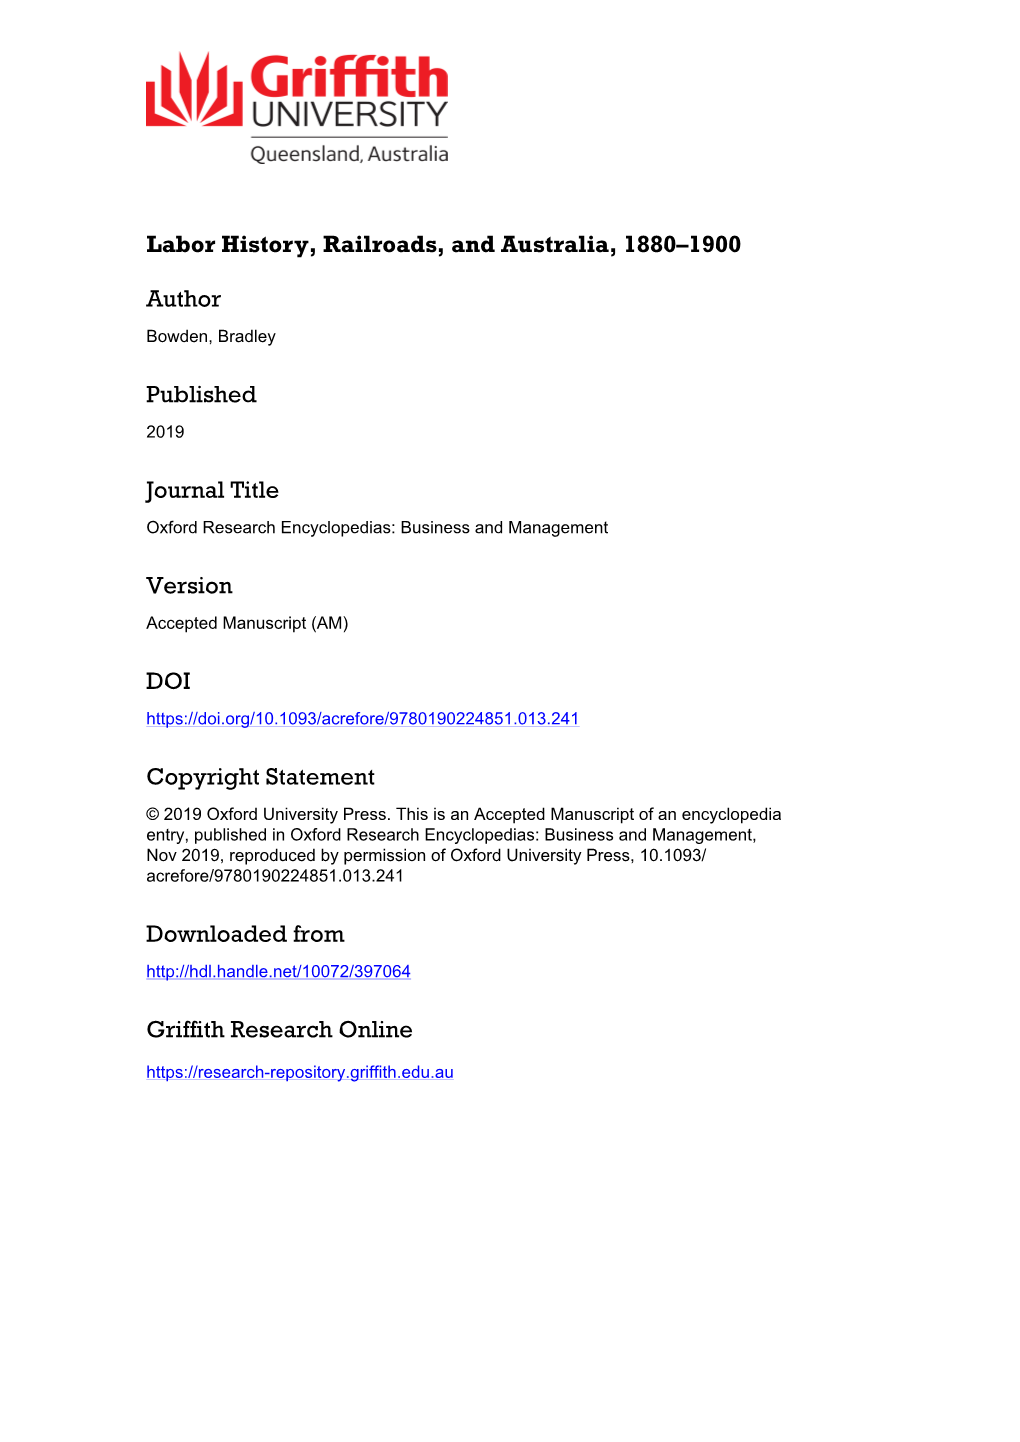 Labor History, Railroads and Australia, 1880-1900